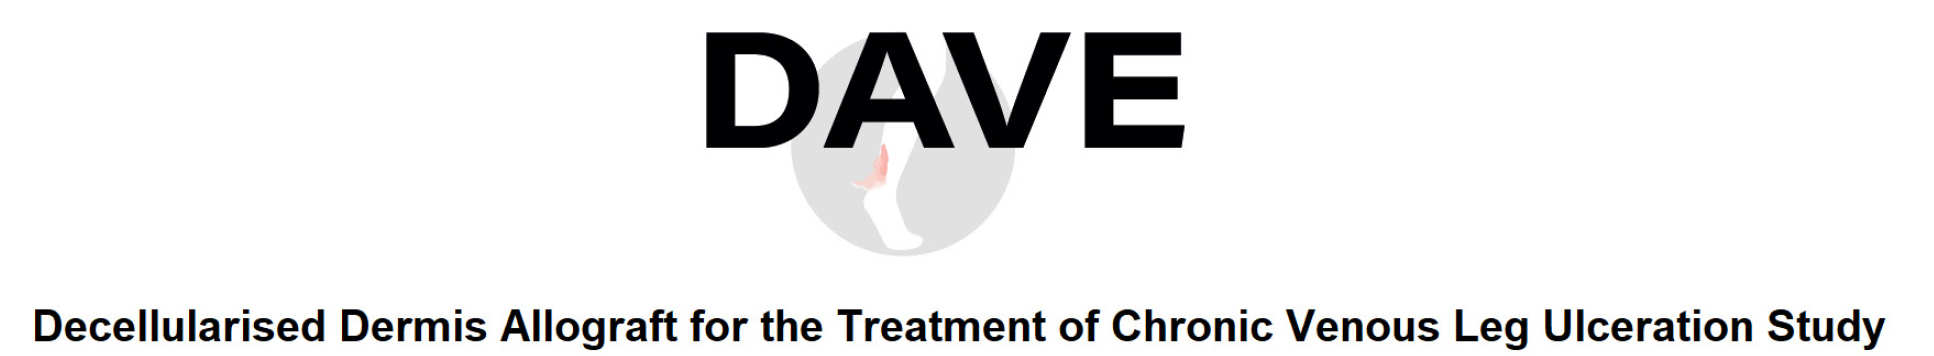 DAVE study logo